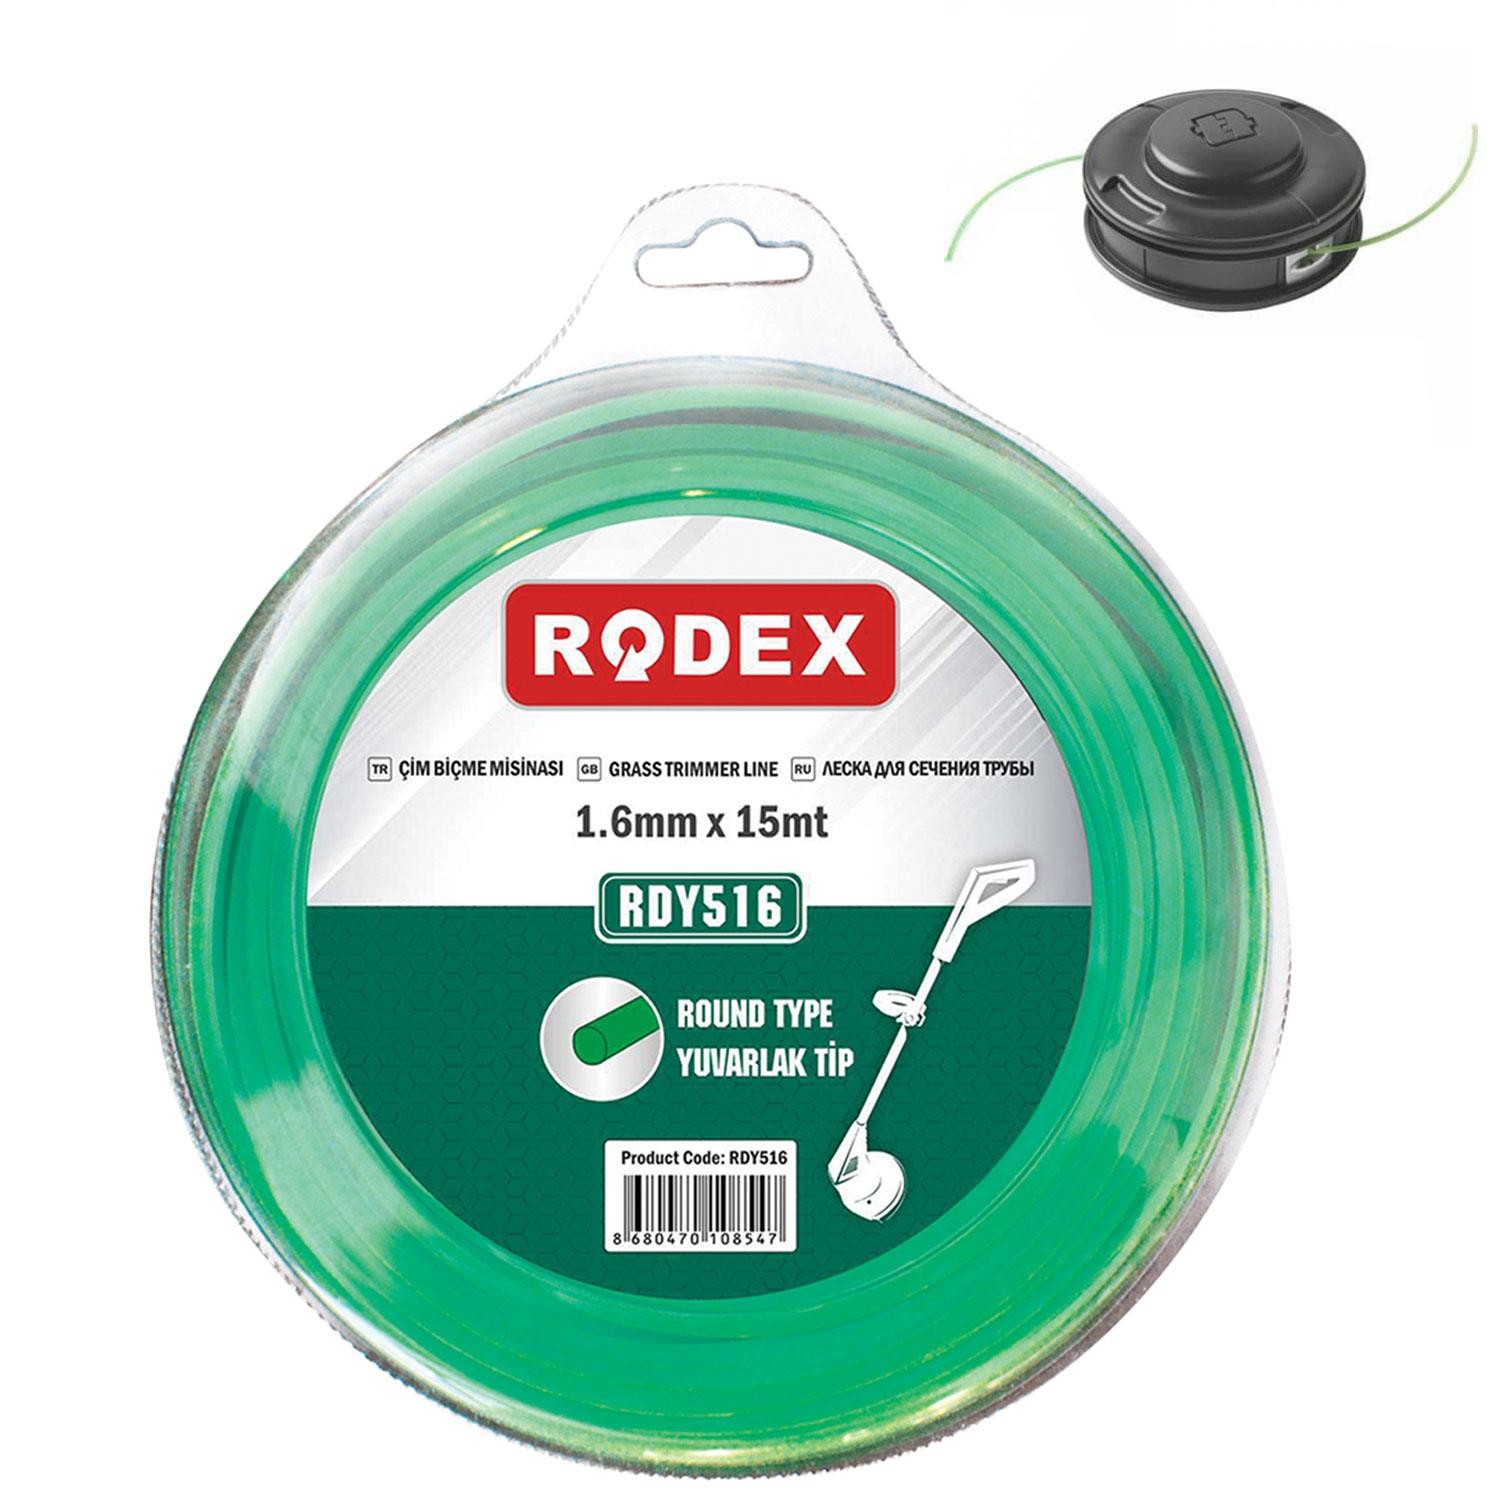 Rodex RDY516 Misina Motorlu Tırpan Yuvarlak Misina 1.6 mm 15 Metre Yeşil